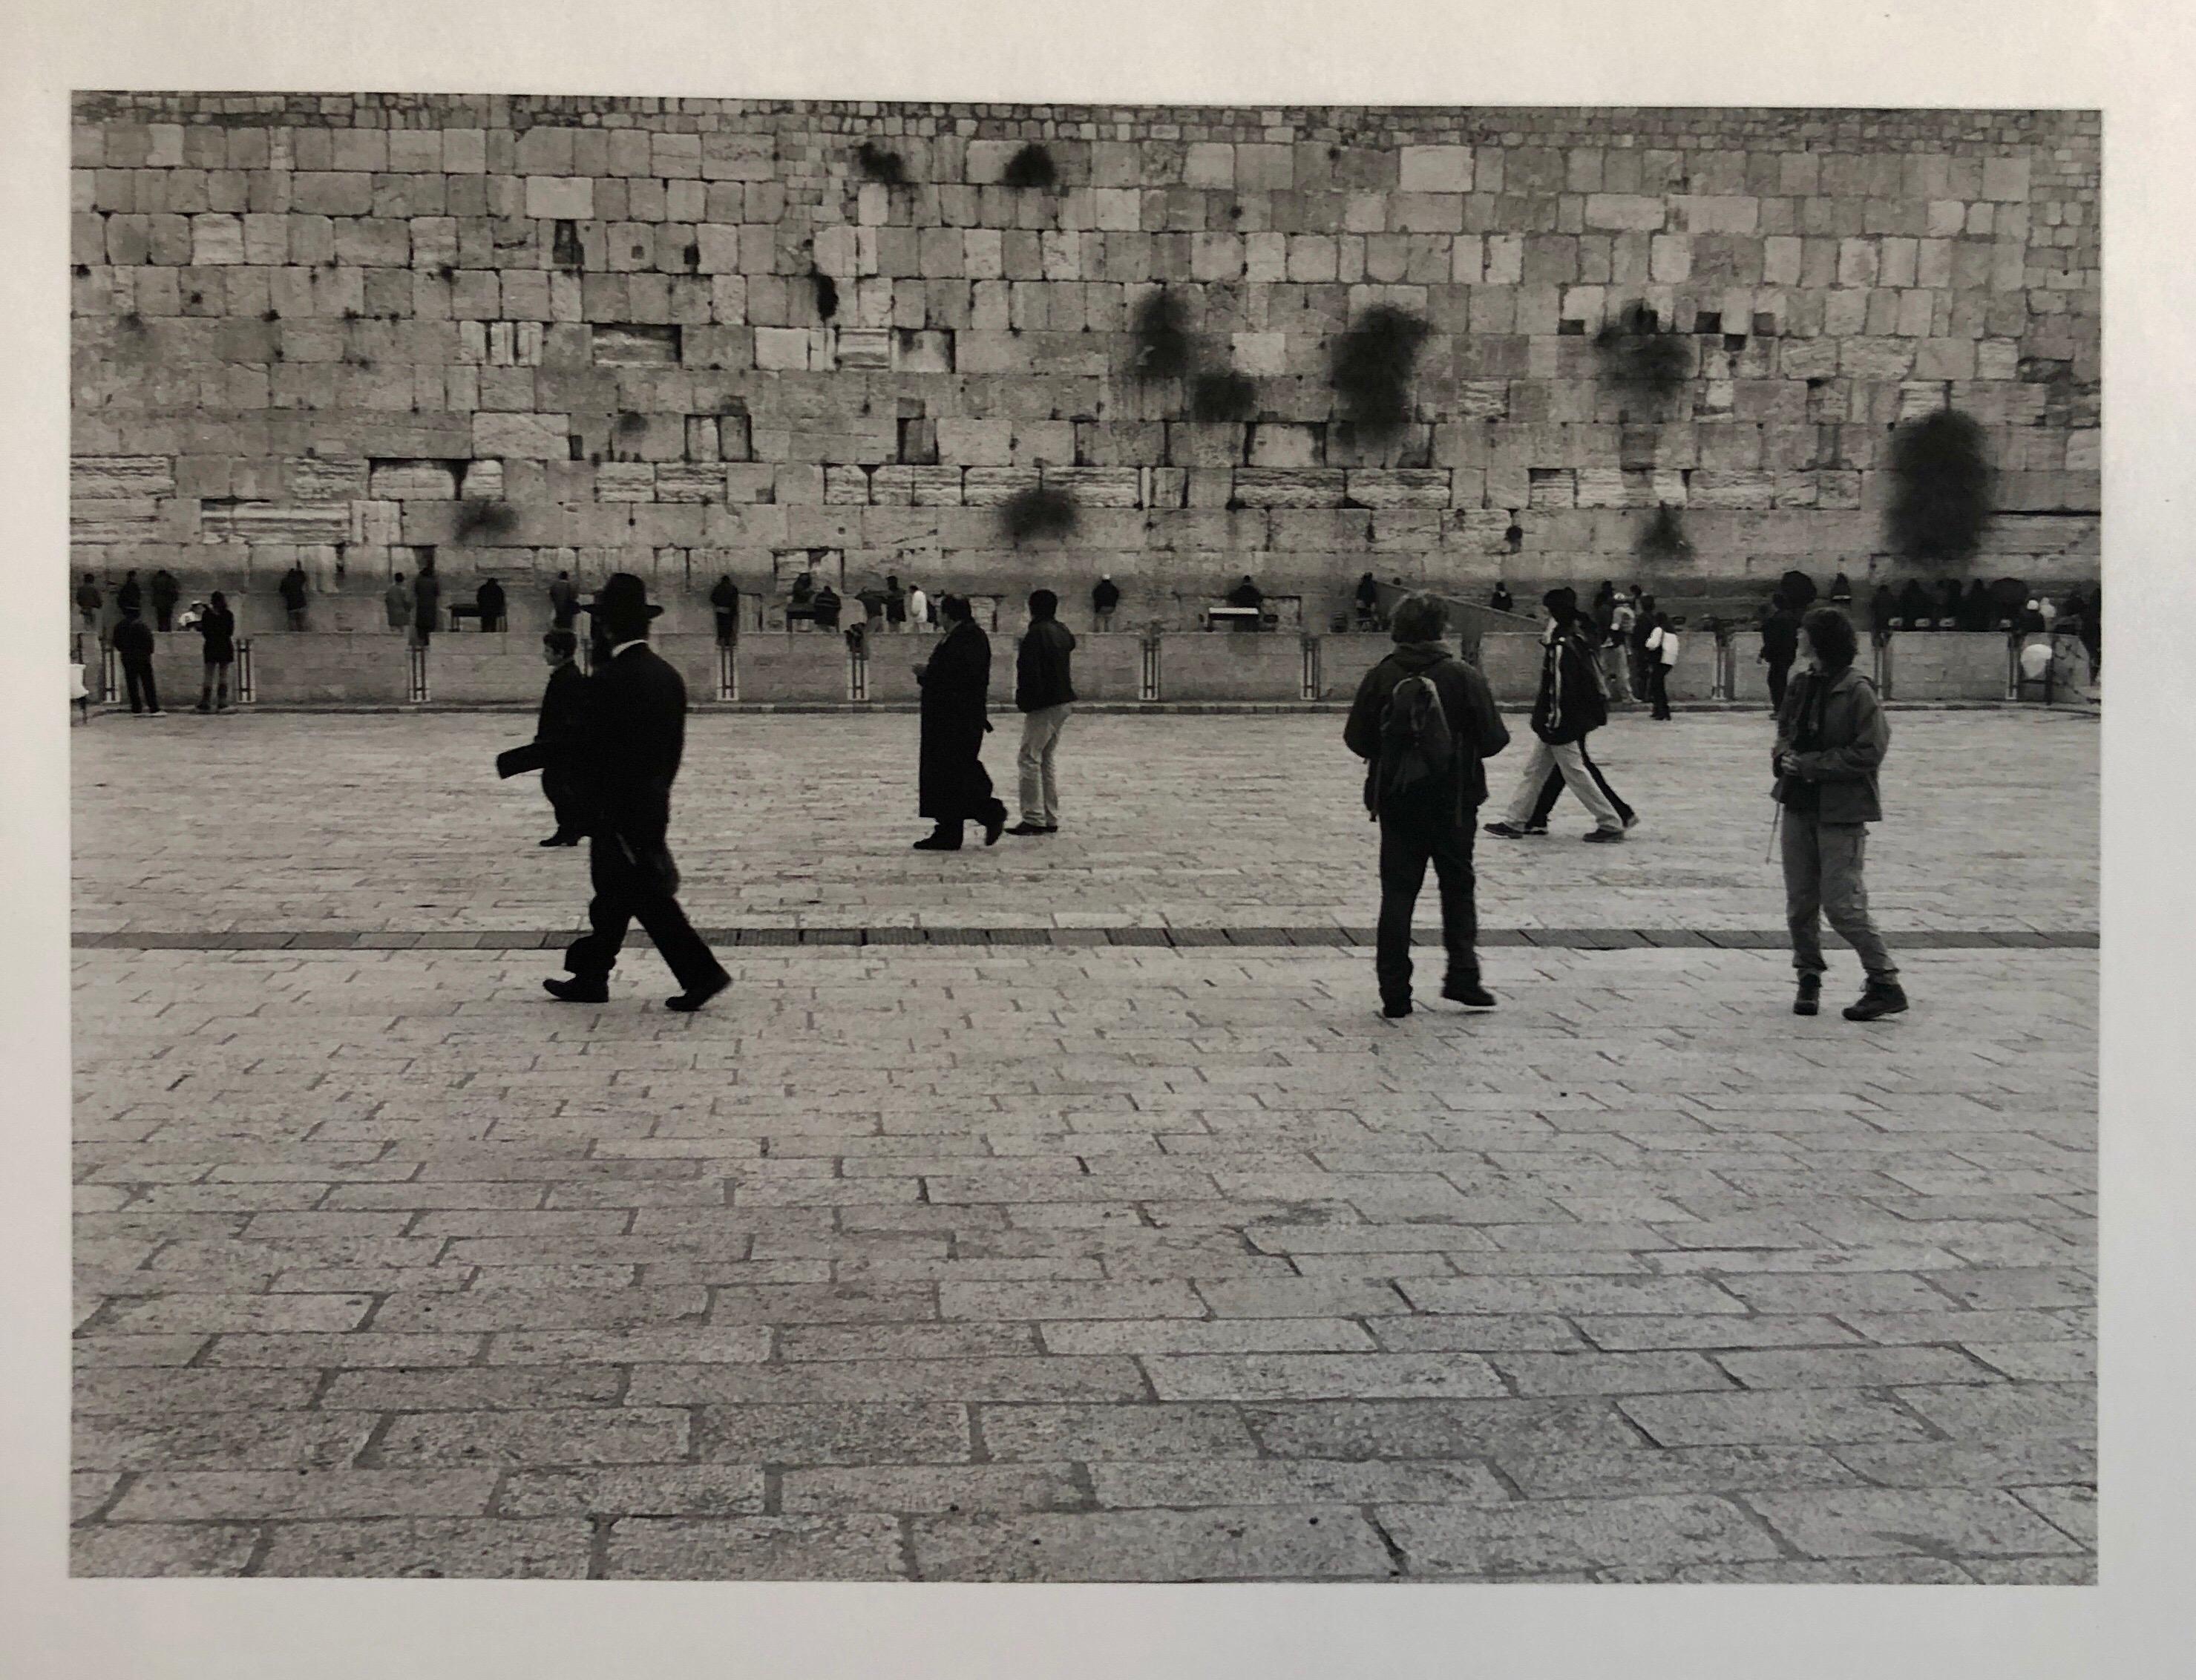 Mikael Levin Landscape Photograph - Jerusalem, Israel Western Wall Ed of 5 Vintage Silver gelatin Photograph Print